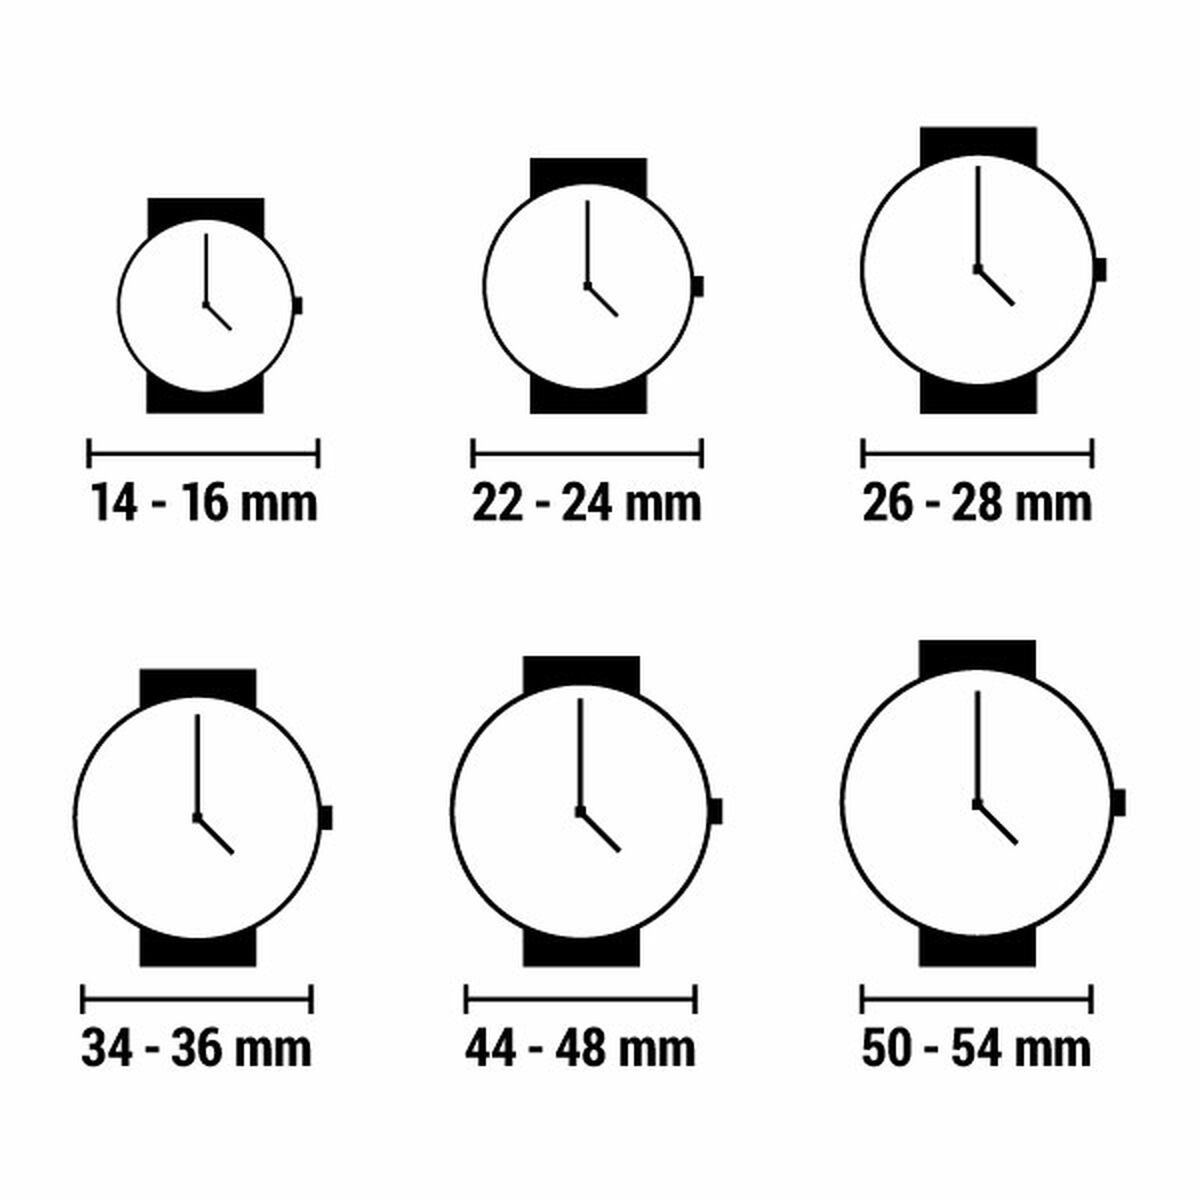 Horloge Dames Bellevue B.55 (Ø 40 mm)